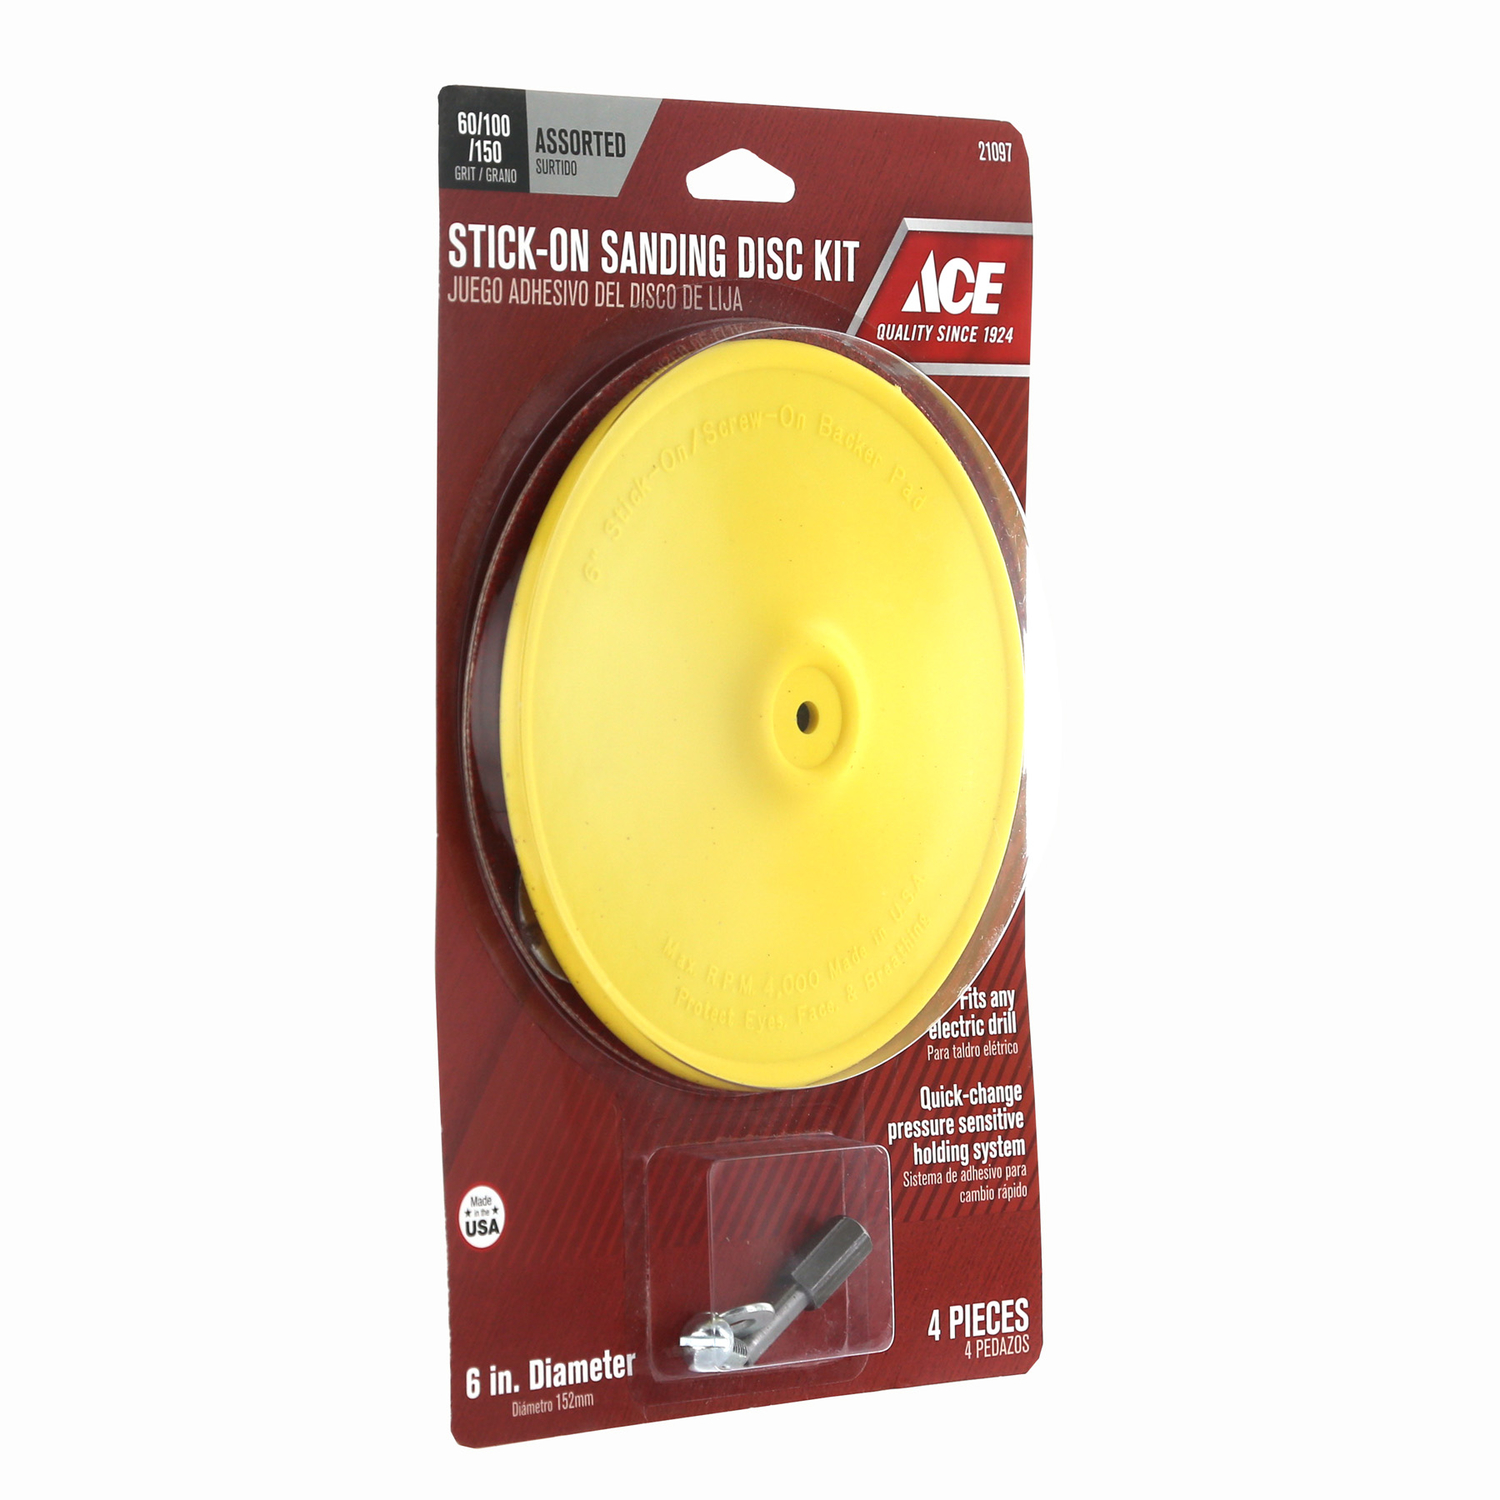 UPC 082901210979 product image for Ace(r) Sanding Disc Kit | upcitemdb.com